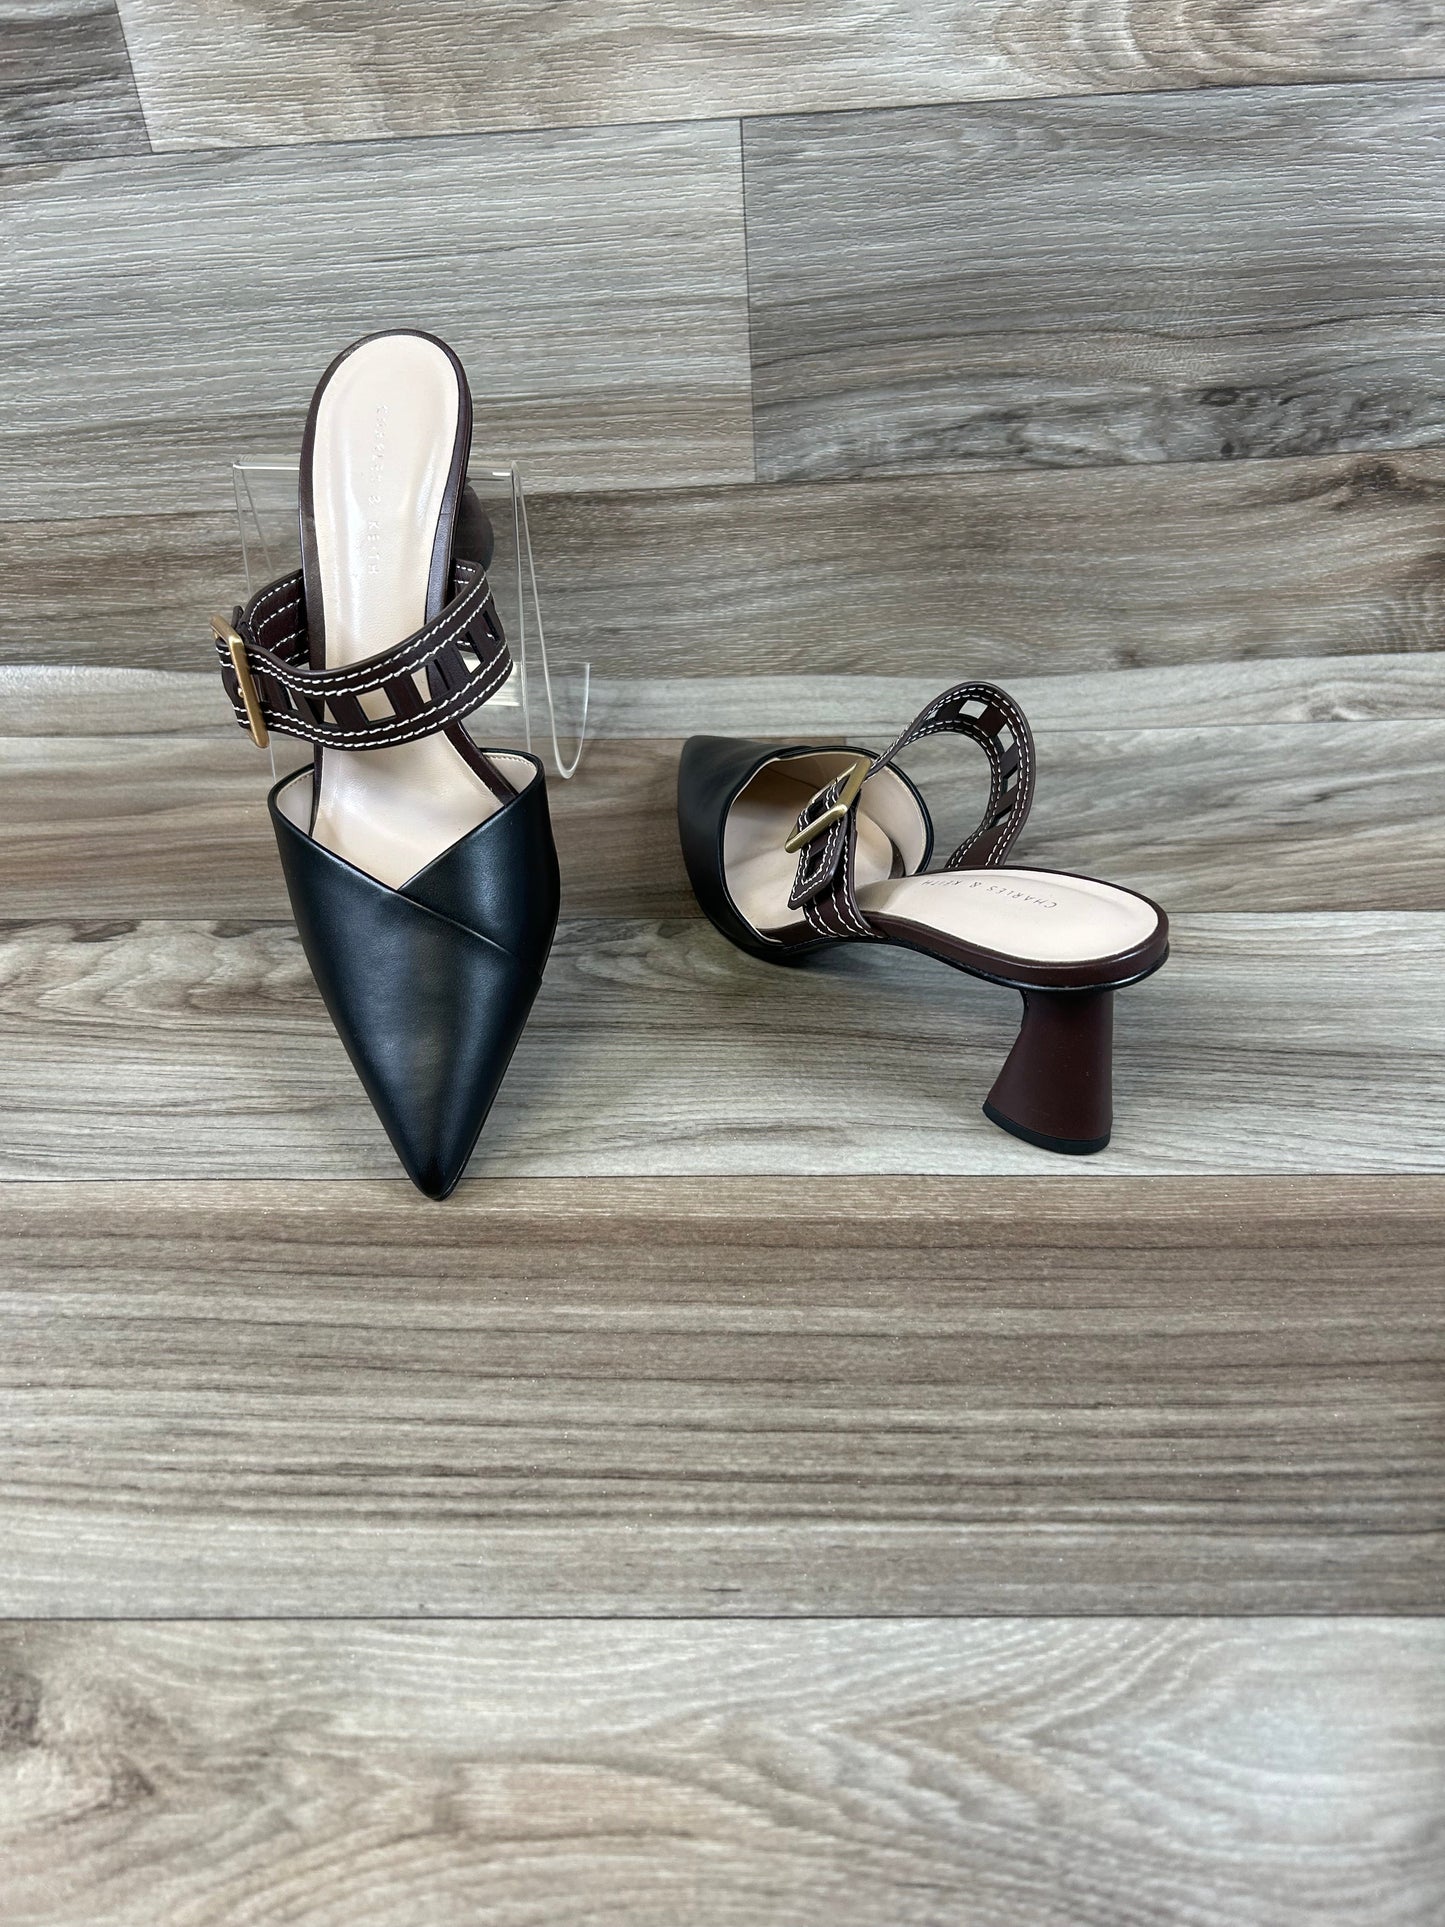 Black & Brown Shoes Heels Block Cme, Size 6.5